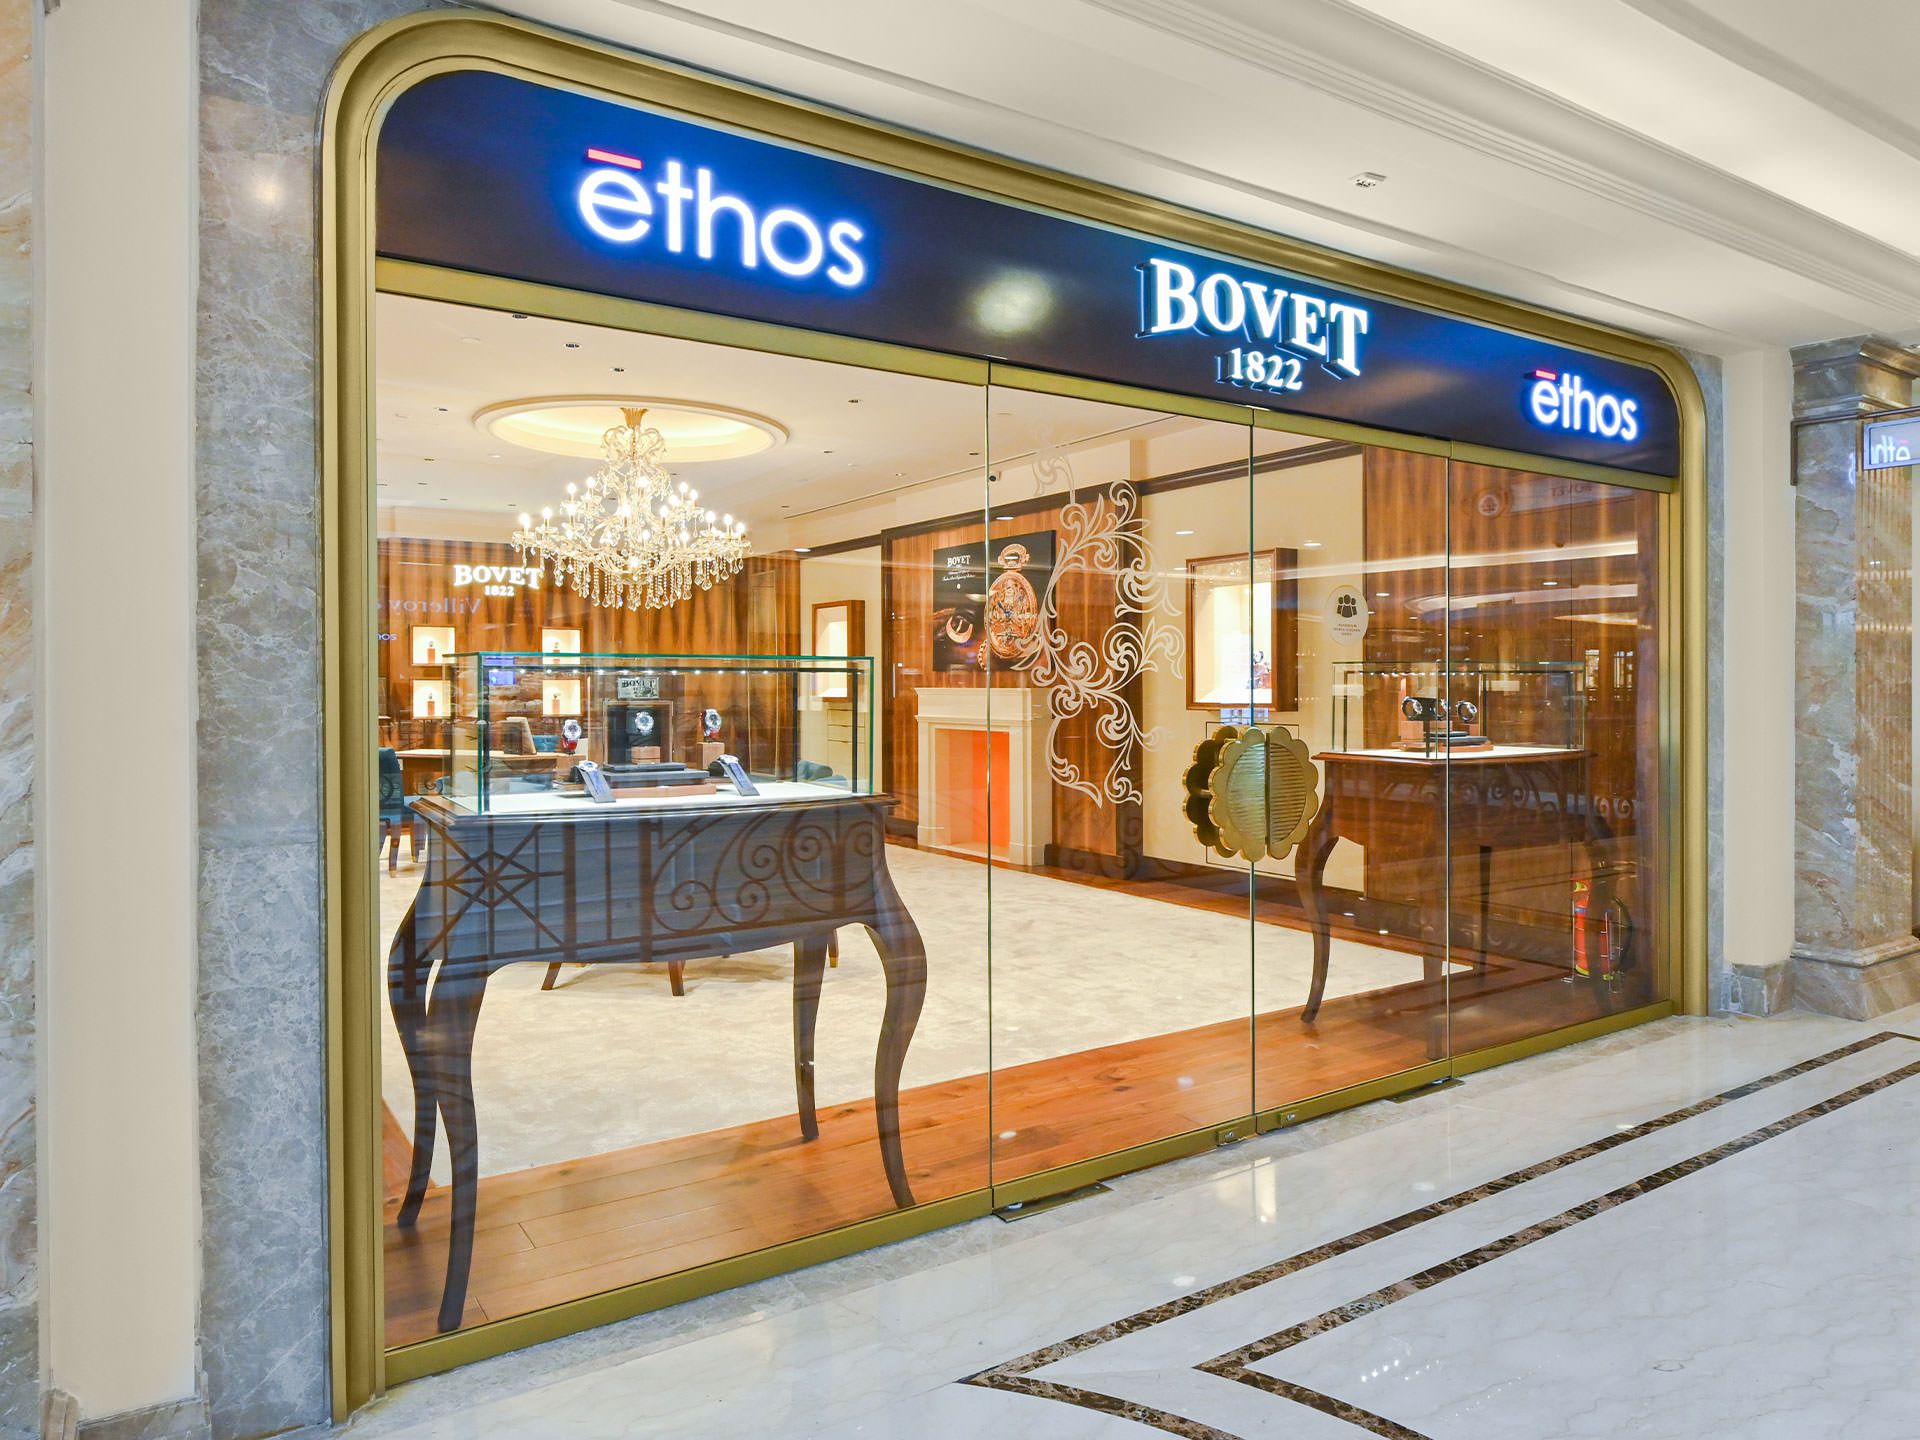 Bovet Boutique - Ethos Watches, New Delhi, Delhi